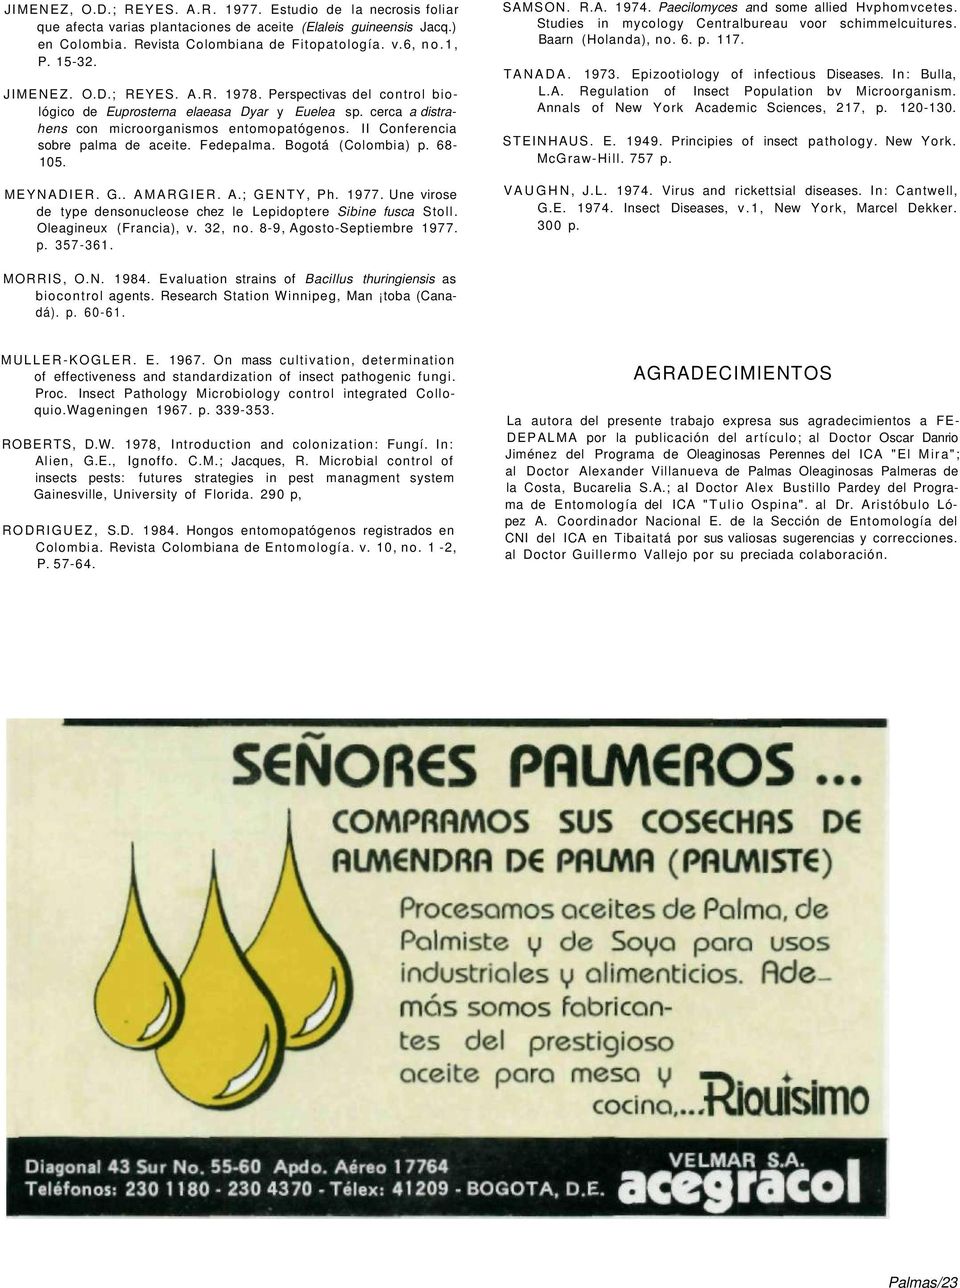 II Conferencia sobre palma de aceite. Fedepalma. Bogotá (Colombia) p. 68-105. MEYNADIER. G.. AMARGIER. A.; GENTY, Ph. 1977. Une virose de type densonucleose chez le Lepidoptere Sibine fusca Stoll.